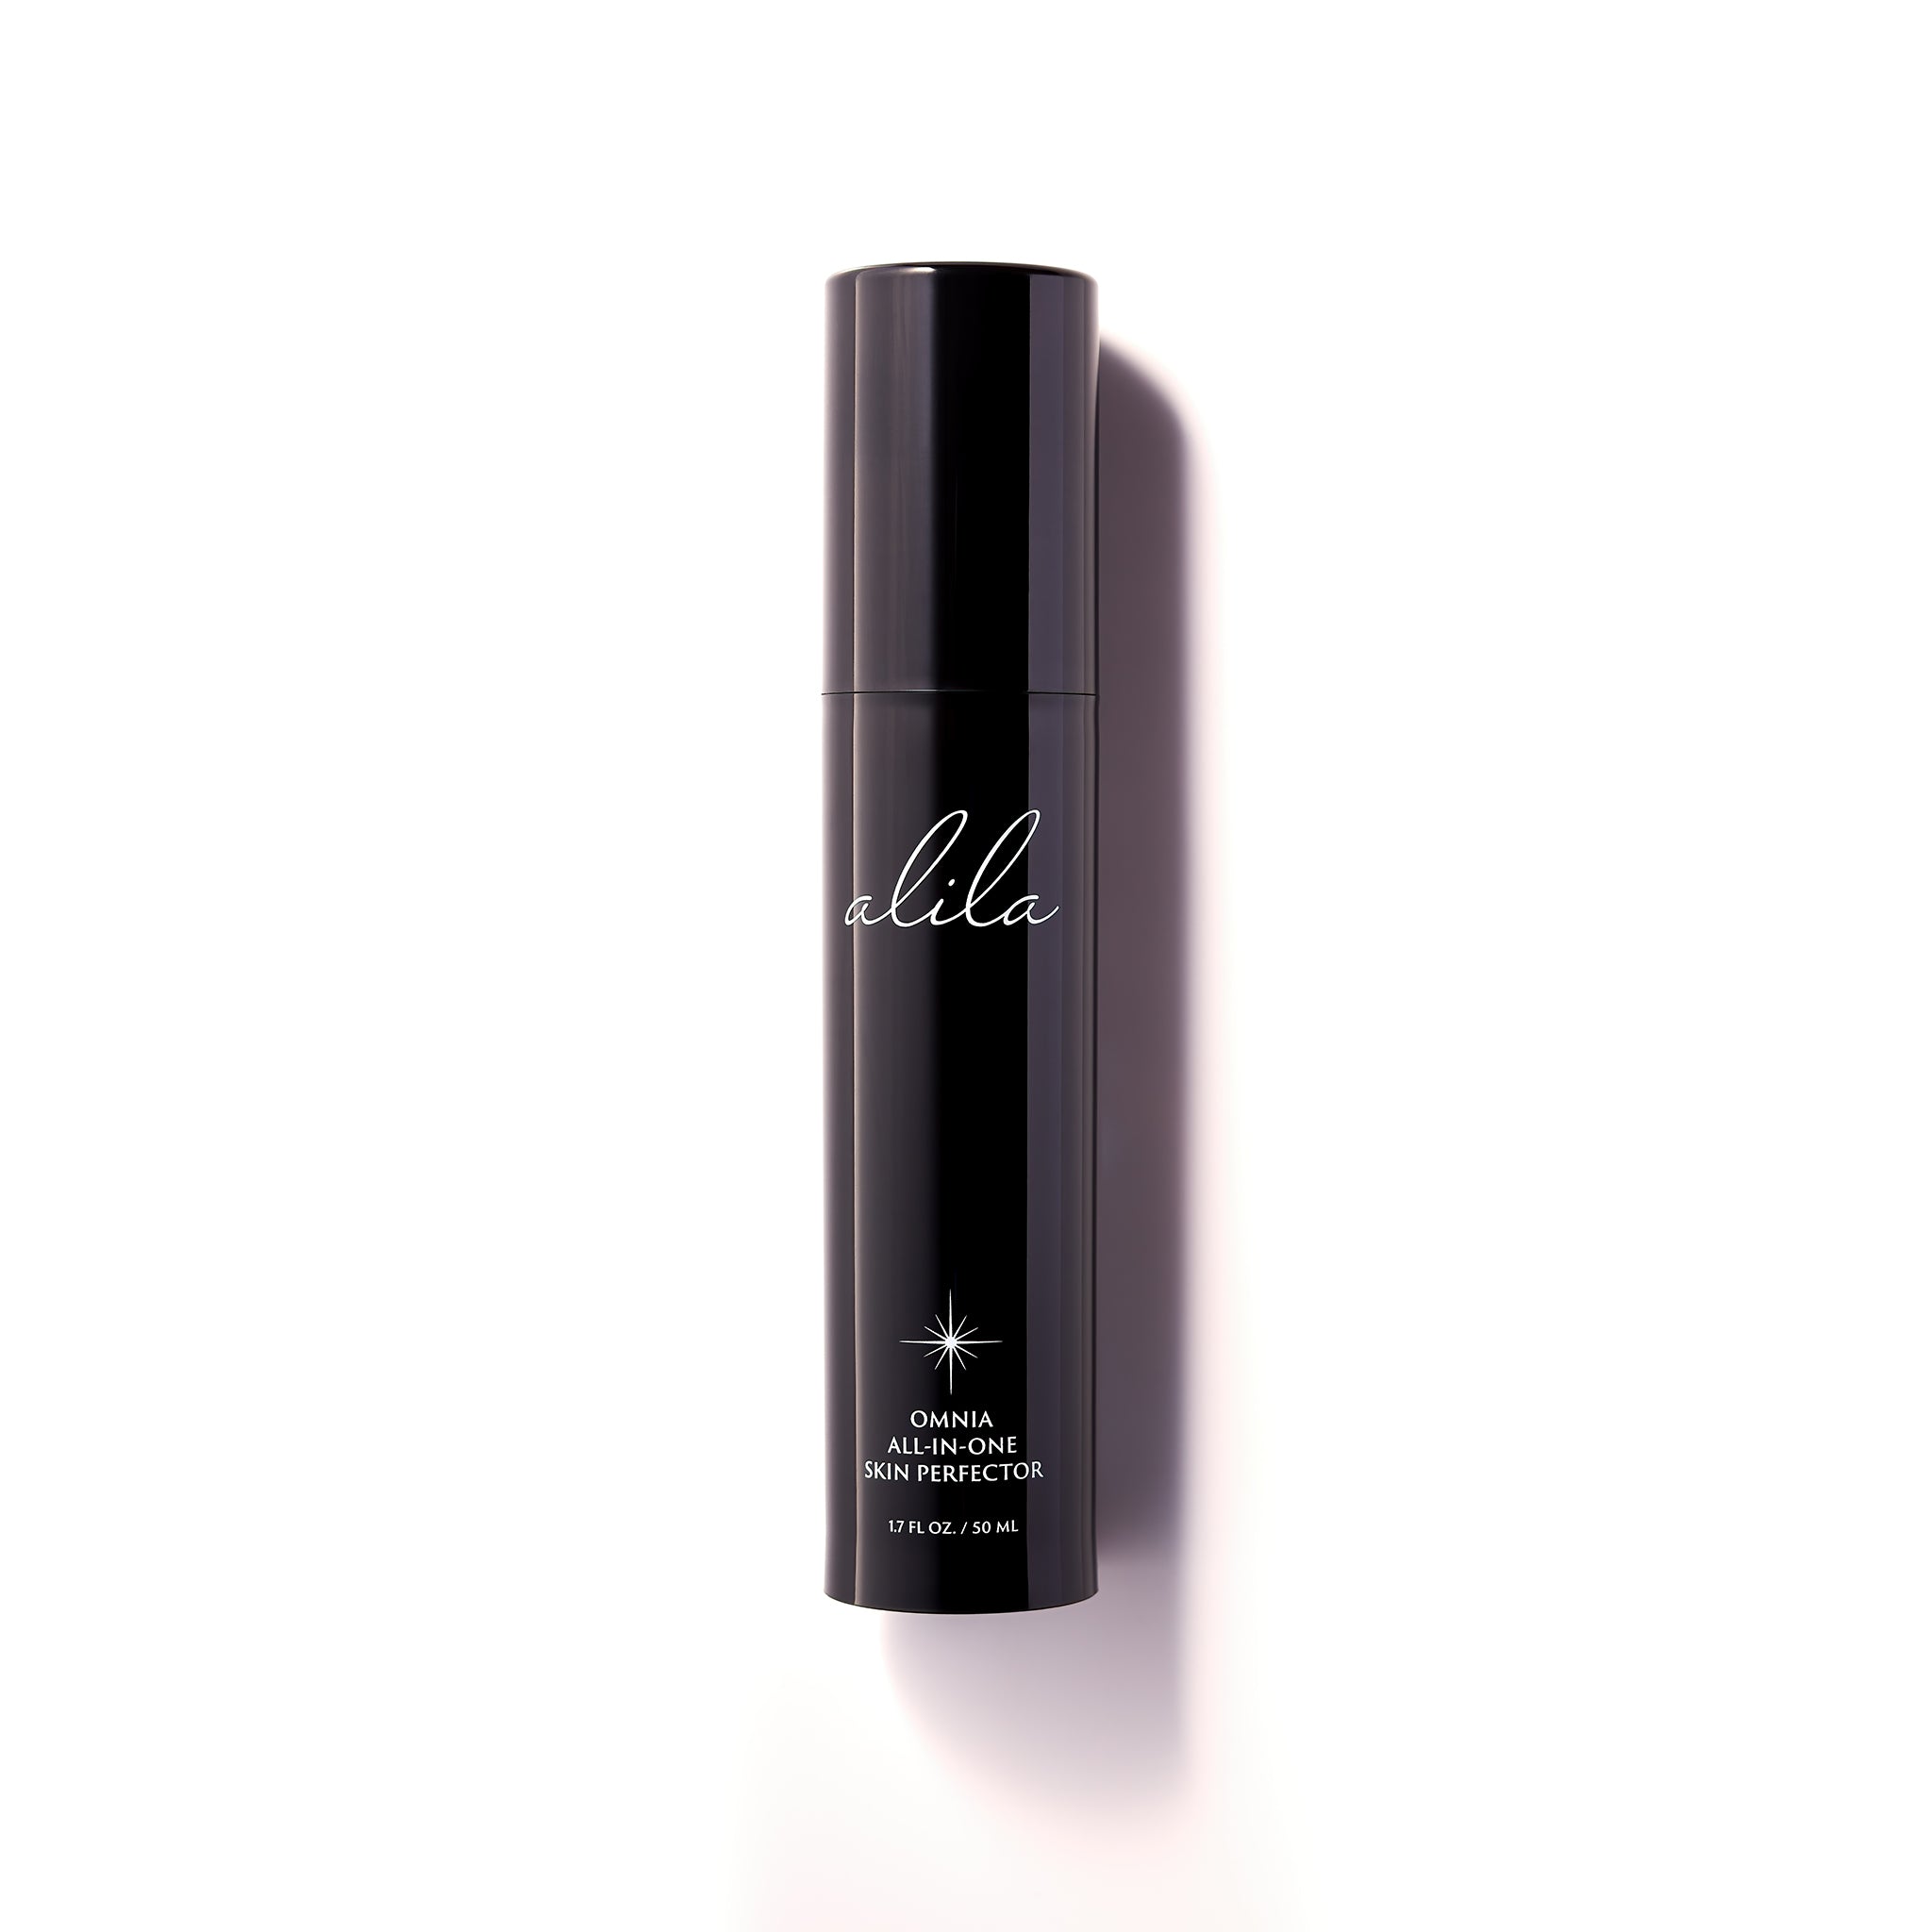 alila beauty omnia all-in-one skin perfector bottle front moisturizer primer bronzer skincare beauty flawless hybrid